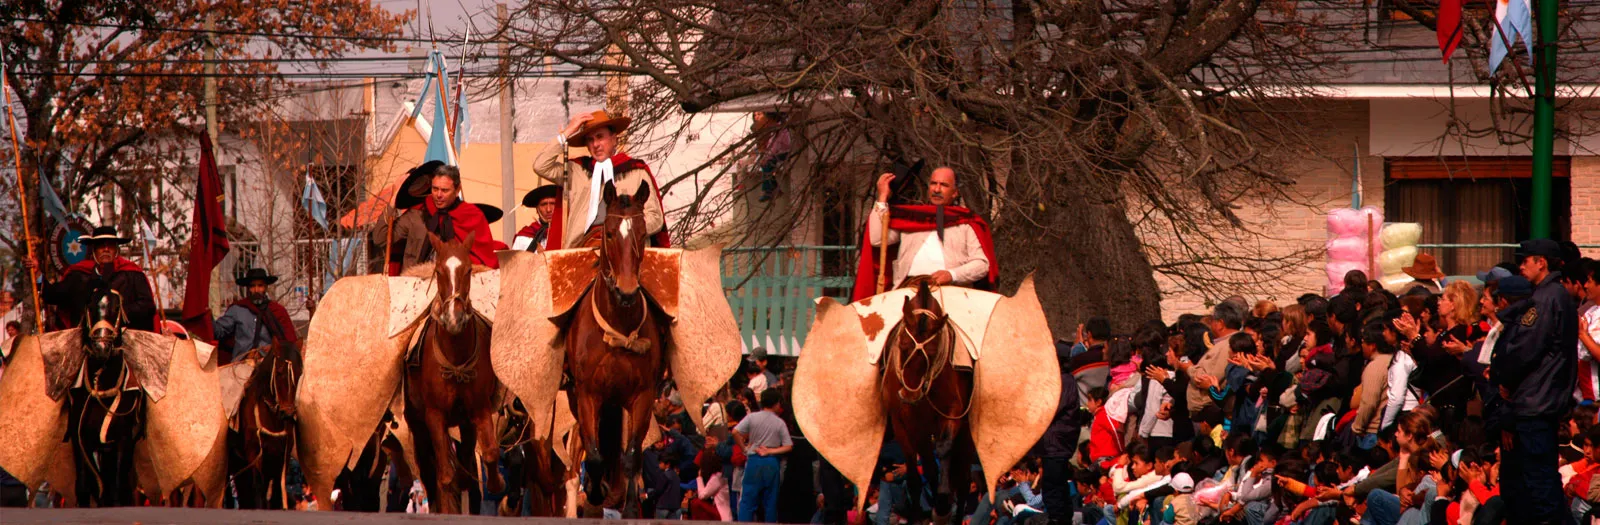 Desfile gaucho, homenaje a Güemes, Salta. Por Eliseo Miciu (gentileza de turismo.salta.gov.ar)